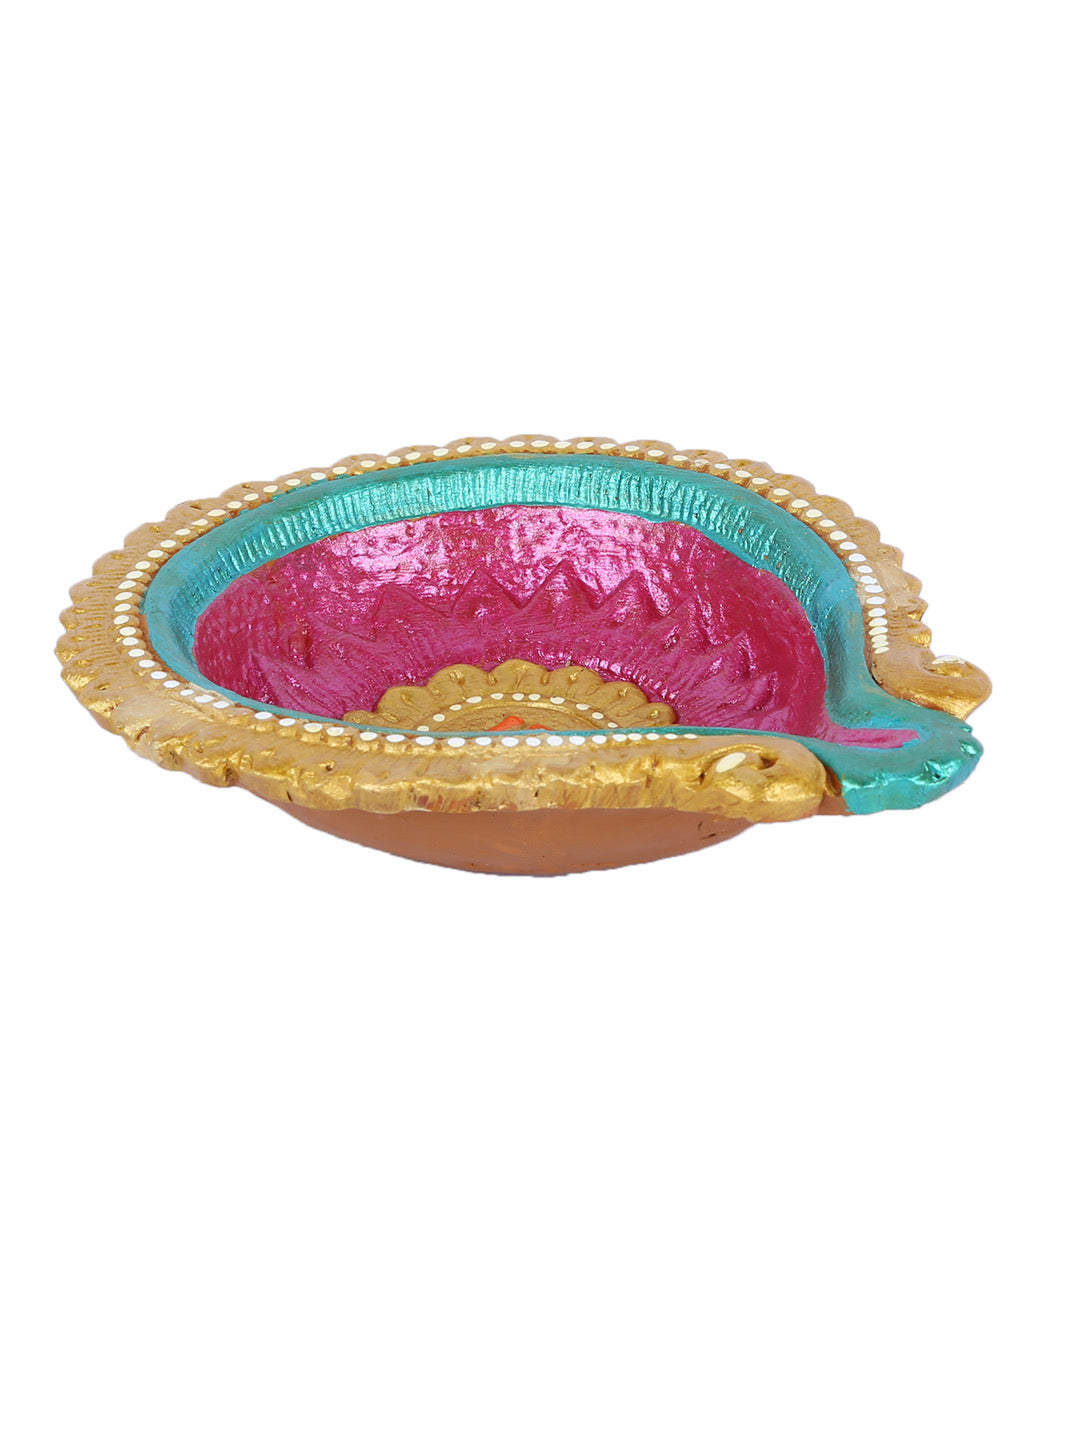 Aapno Rajasthan Multicolor Terracotta Handcrafted Diya for Diwali - 1 pc - Default Title (DD1825)